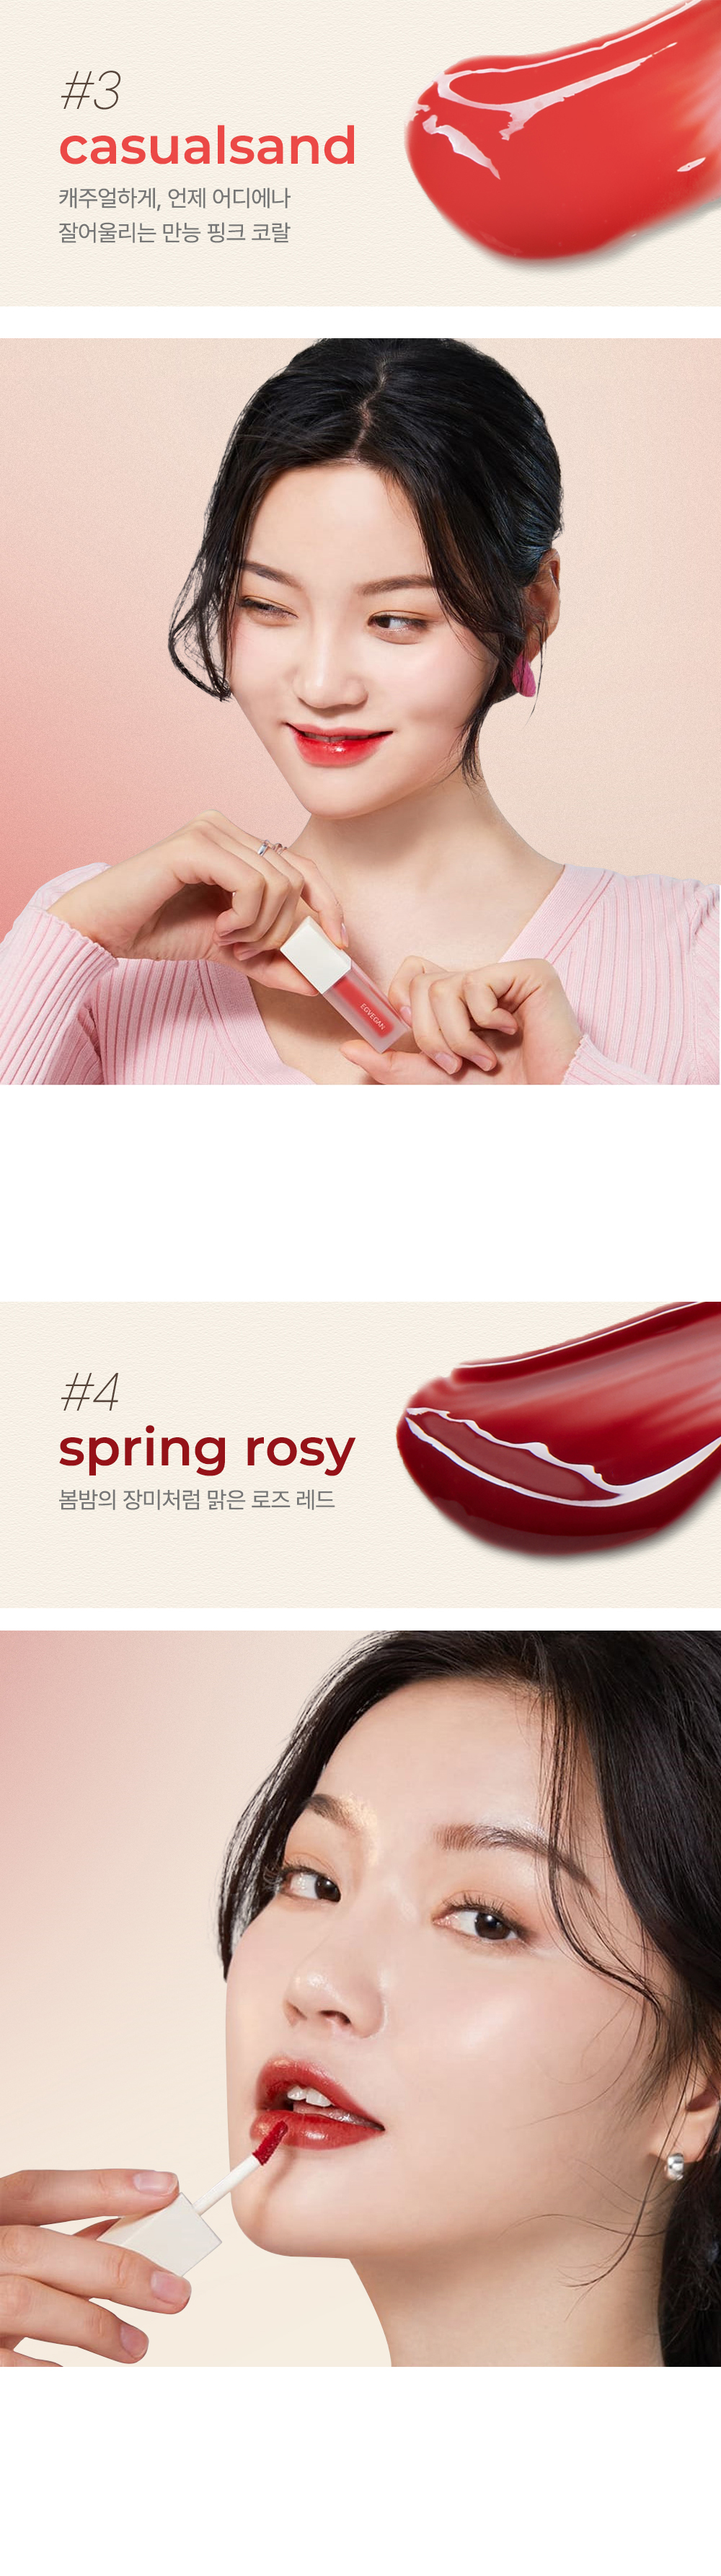 $04 Spring rosy #05 PM11